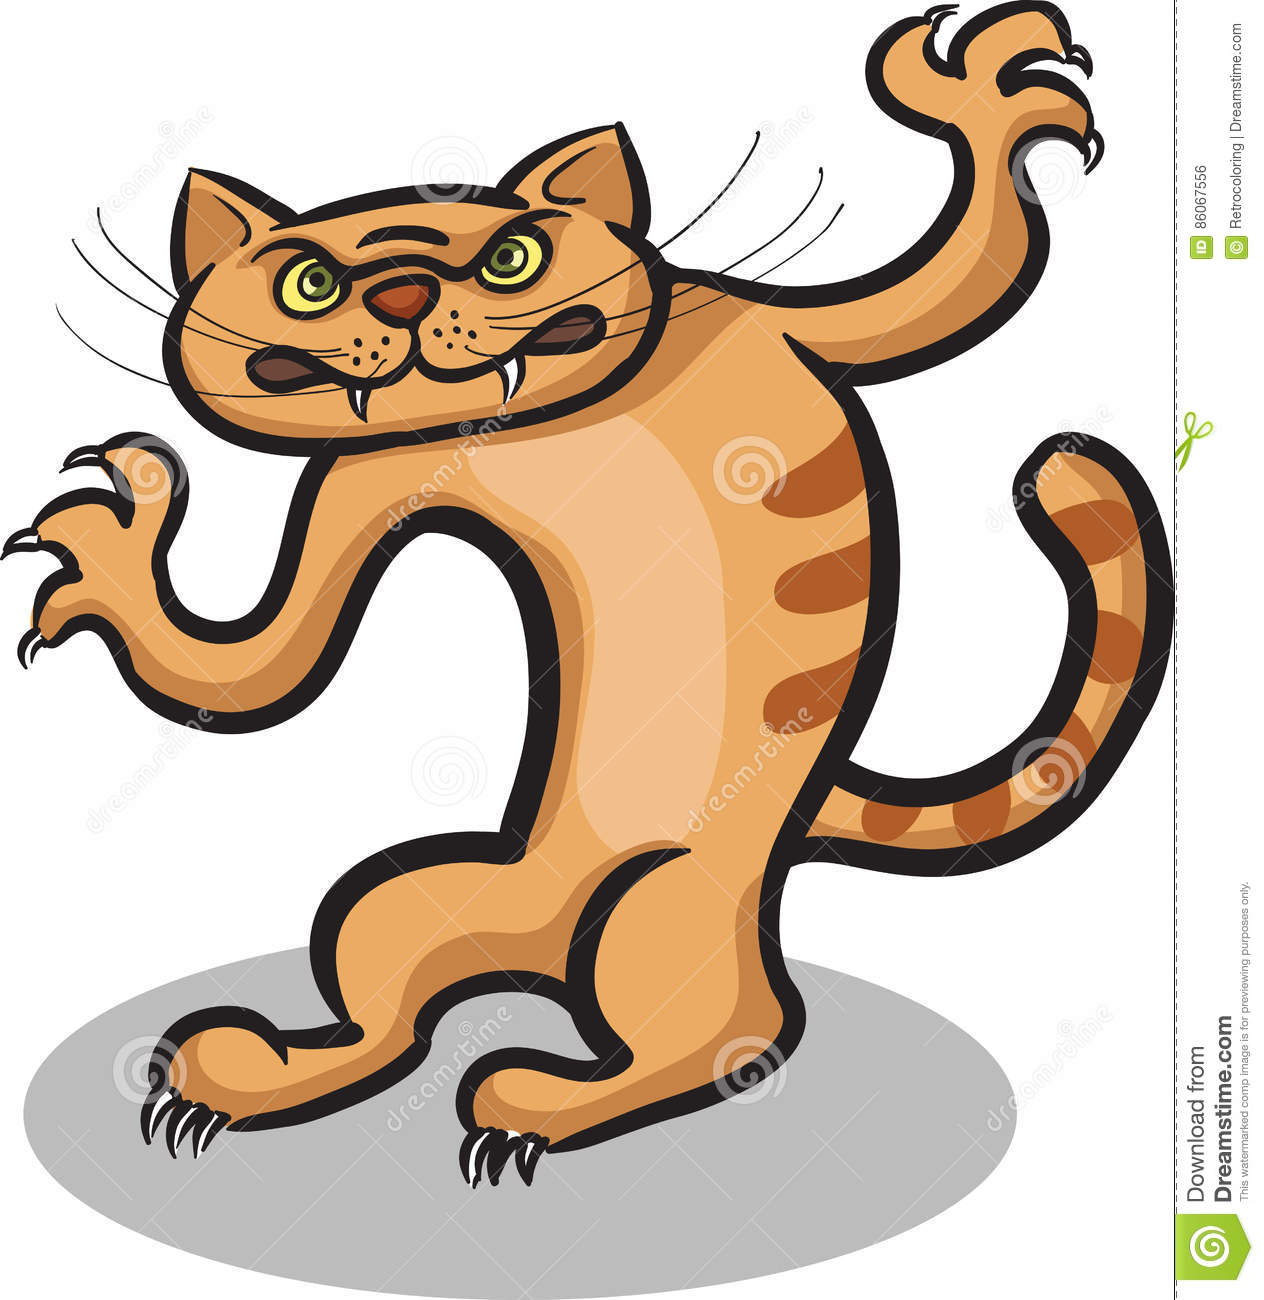 Evil cat stock vector. Illustration of mascot, look